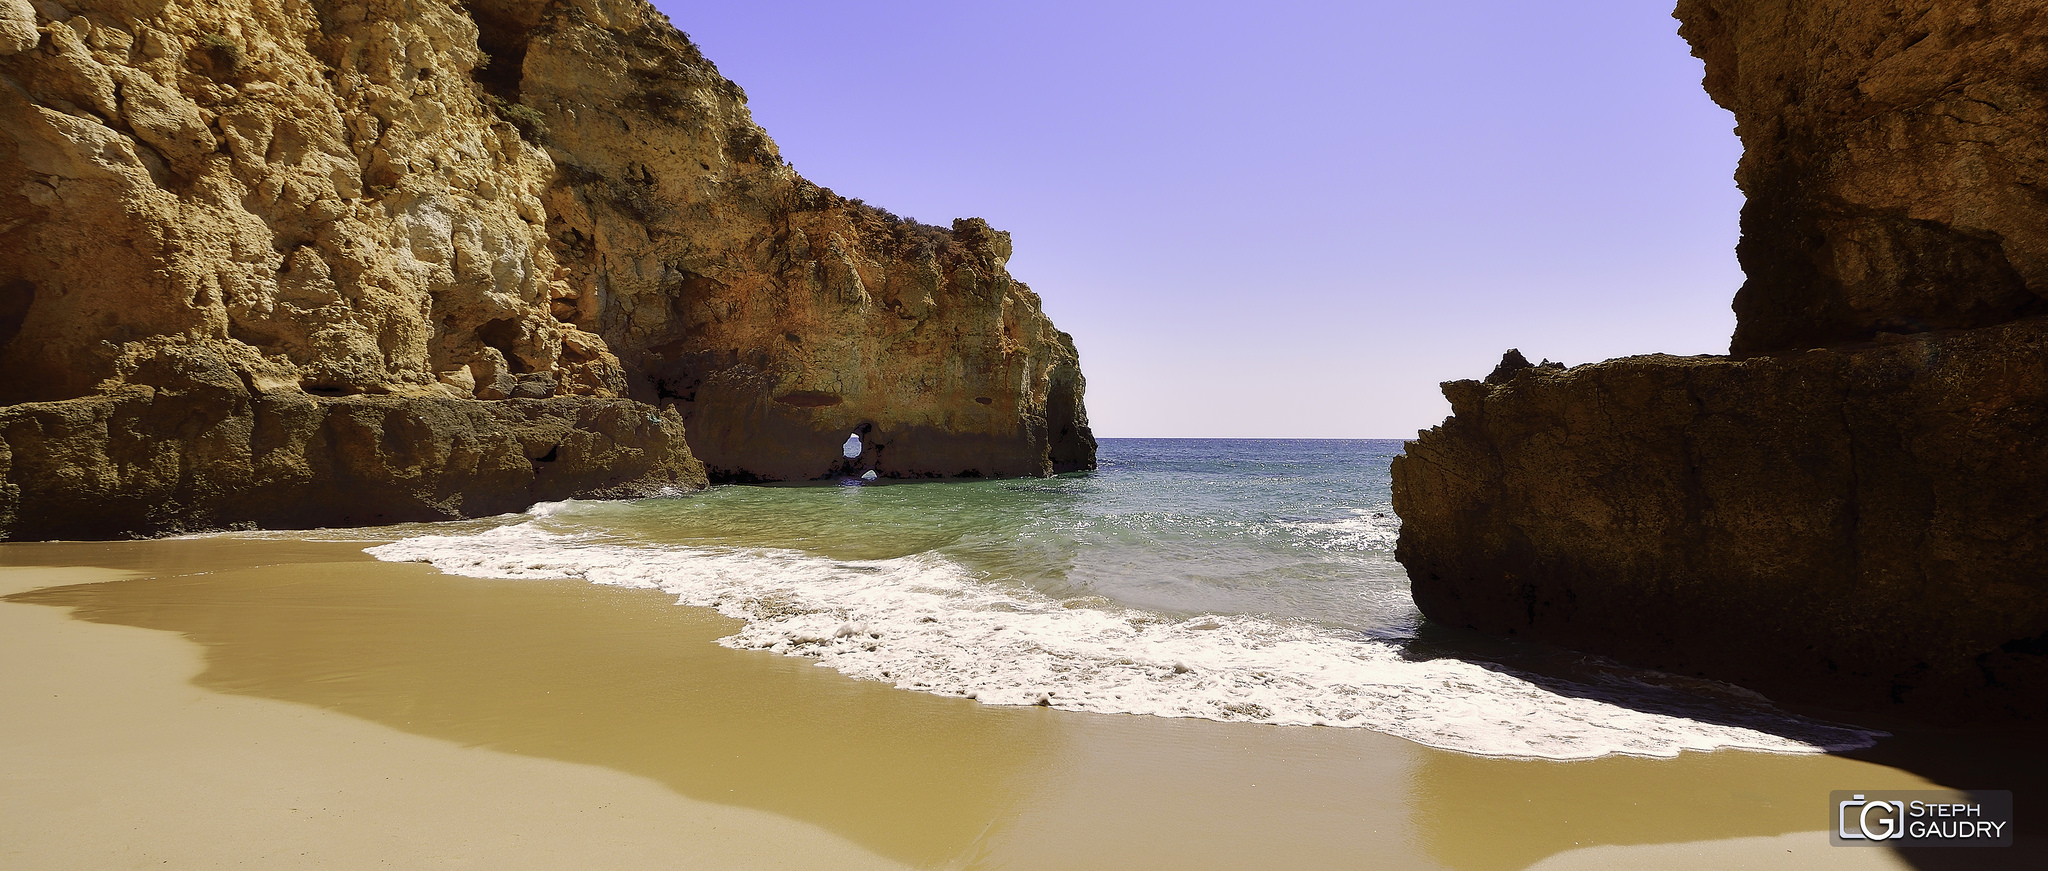 As praias de sonho do Algarve [Klik om de diavoorstelling te starten]